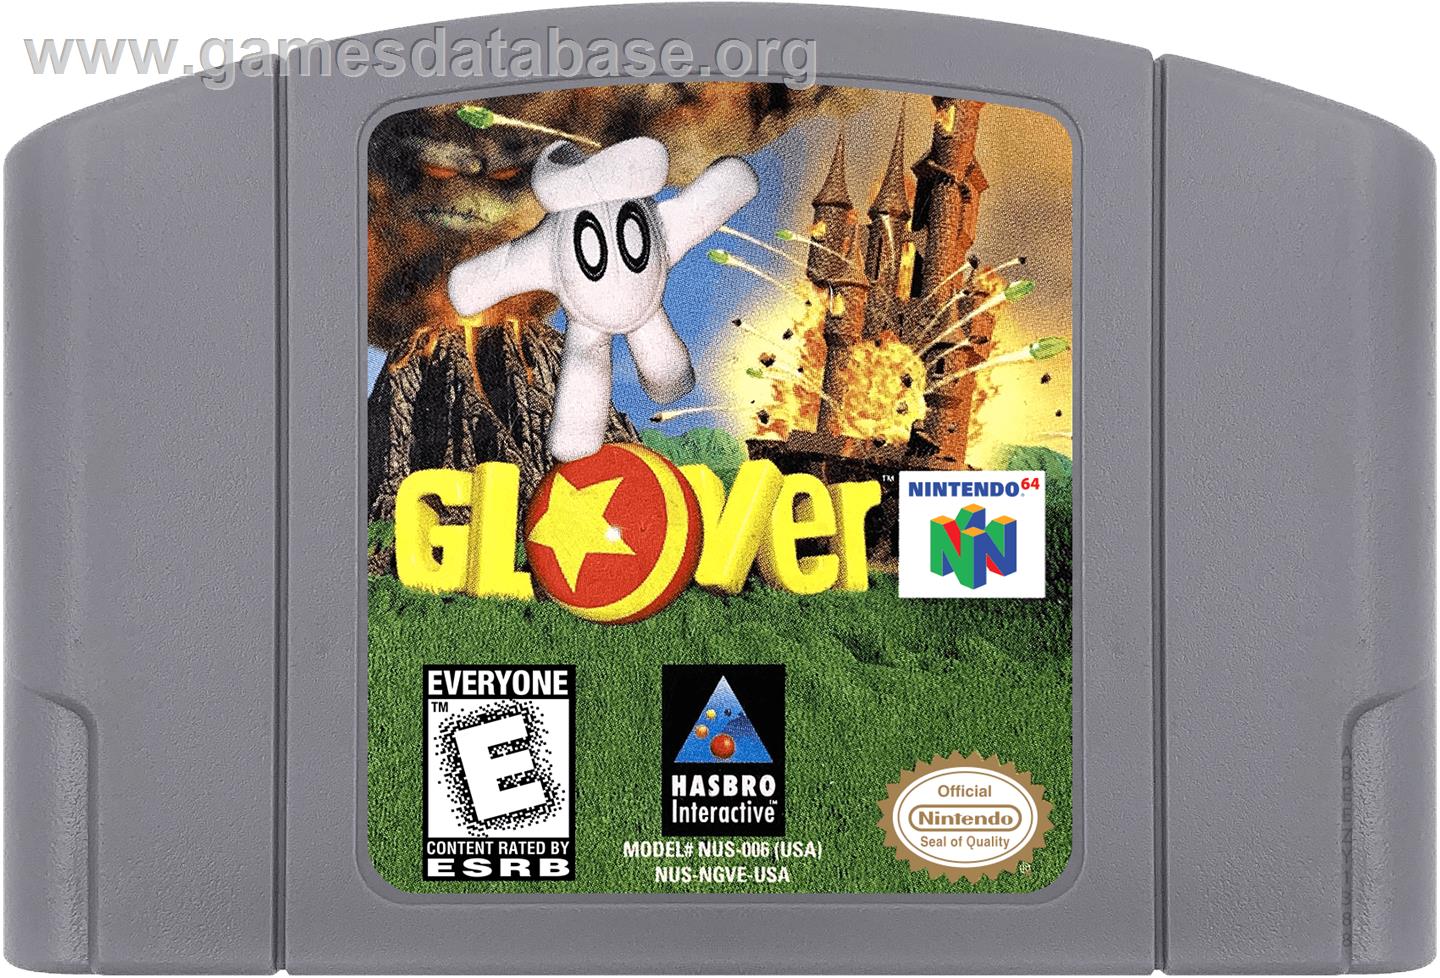 Glover - Nintendo N64 - Artwork - Cartridge